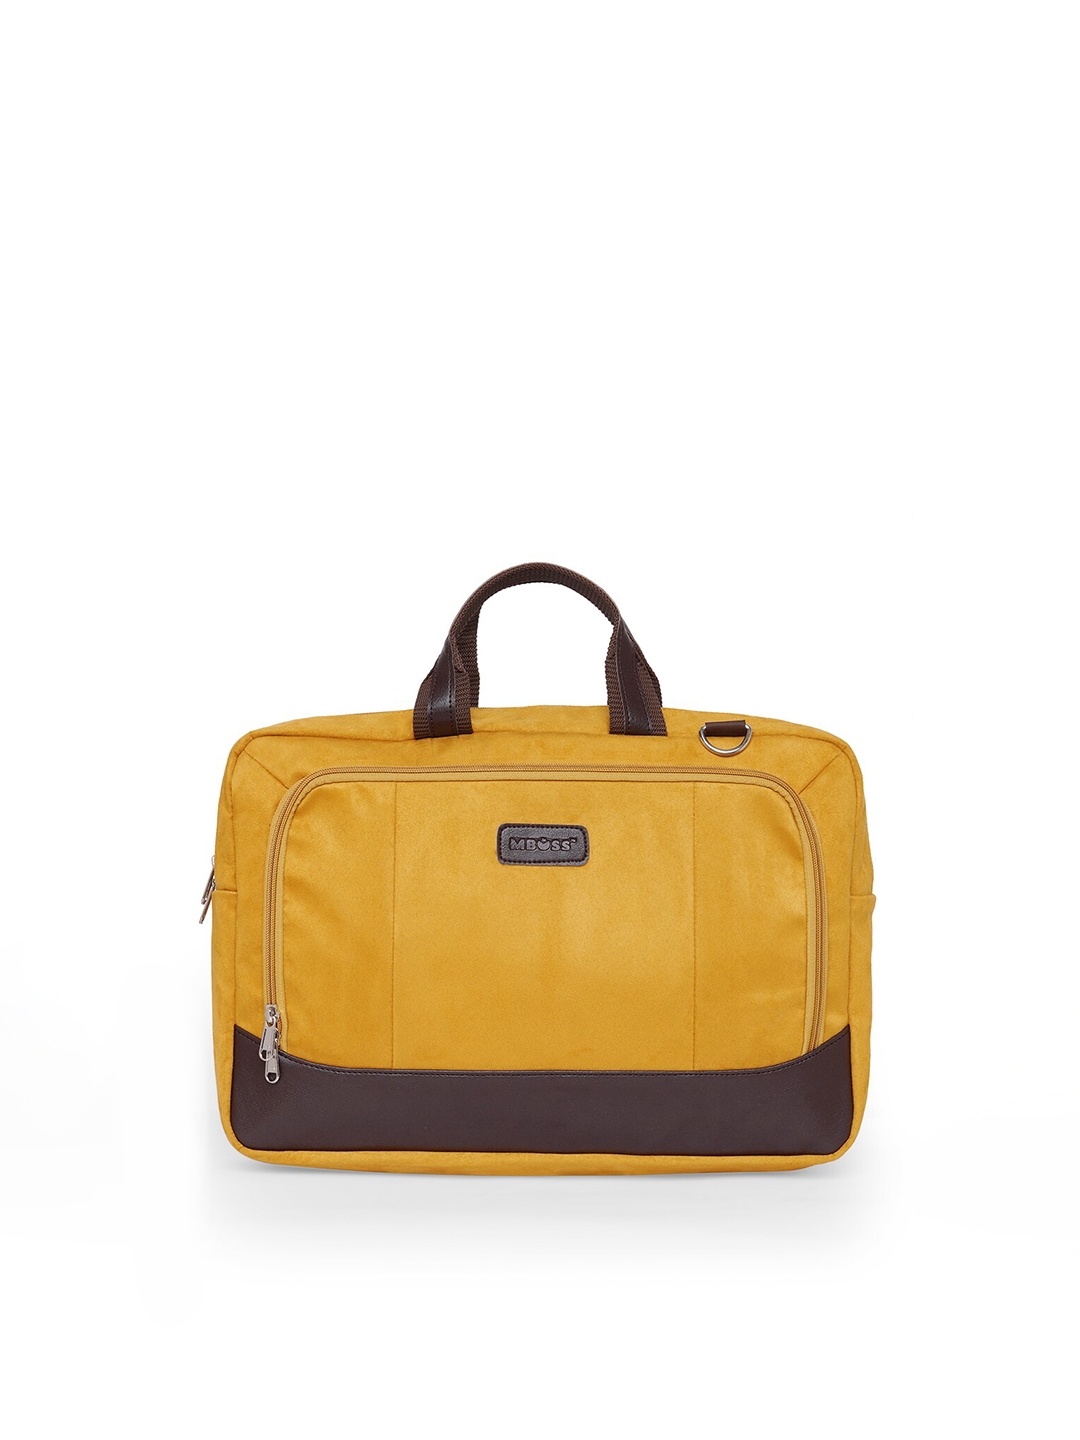 MBOSS Unisex Yellow   Brown Colourblocked 14 Inch Laptop Bag